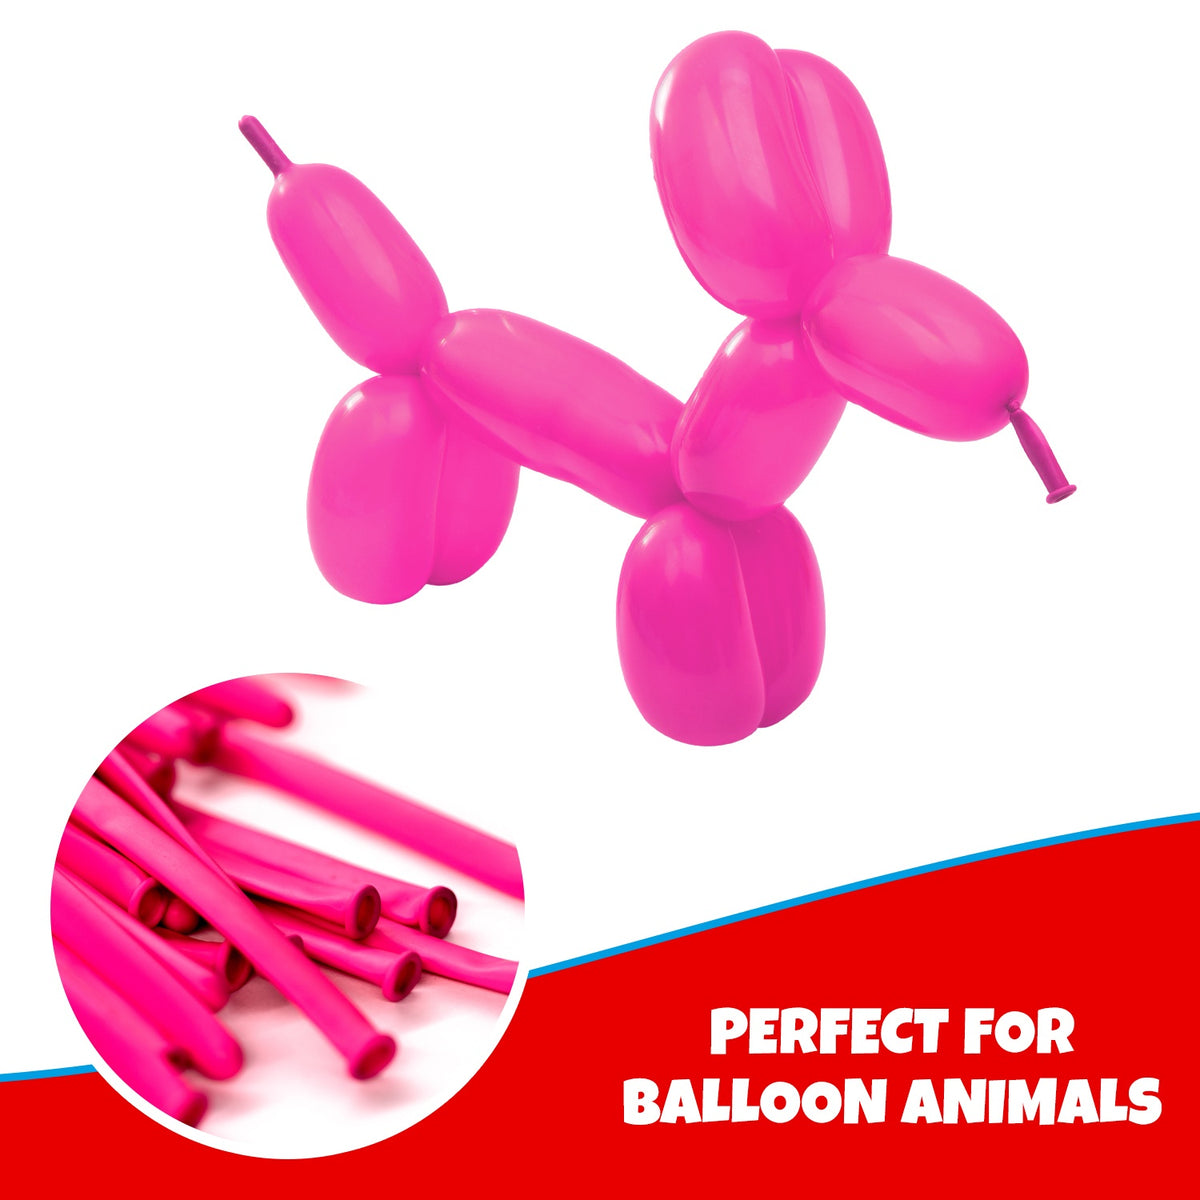 Clownatex 260 Twisting Balloons - Neon Pink (100/bag)